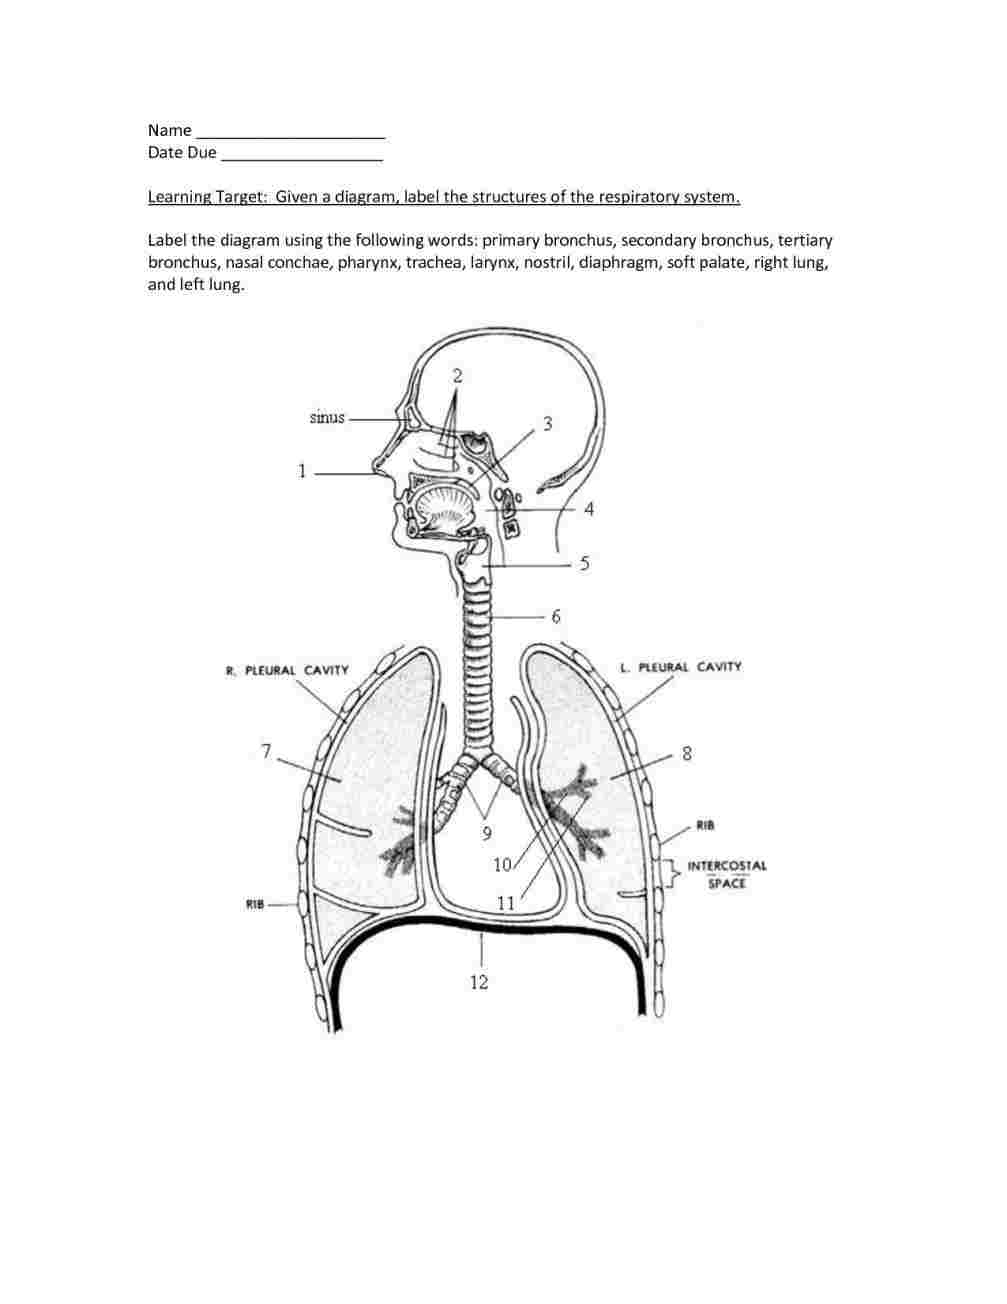 Diagram Of Respiratory System Diagram Of Respiratory System Diagram Of Anatomy